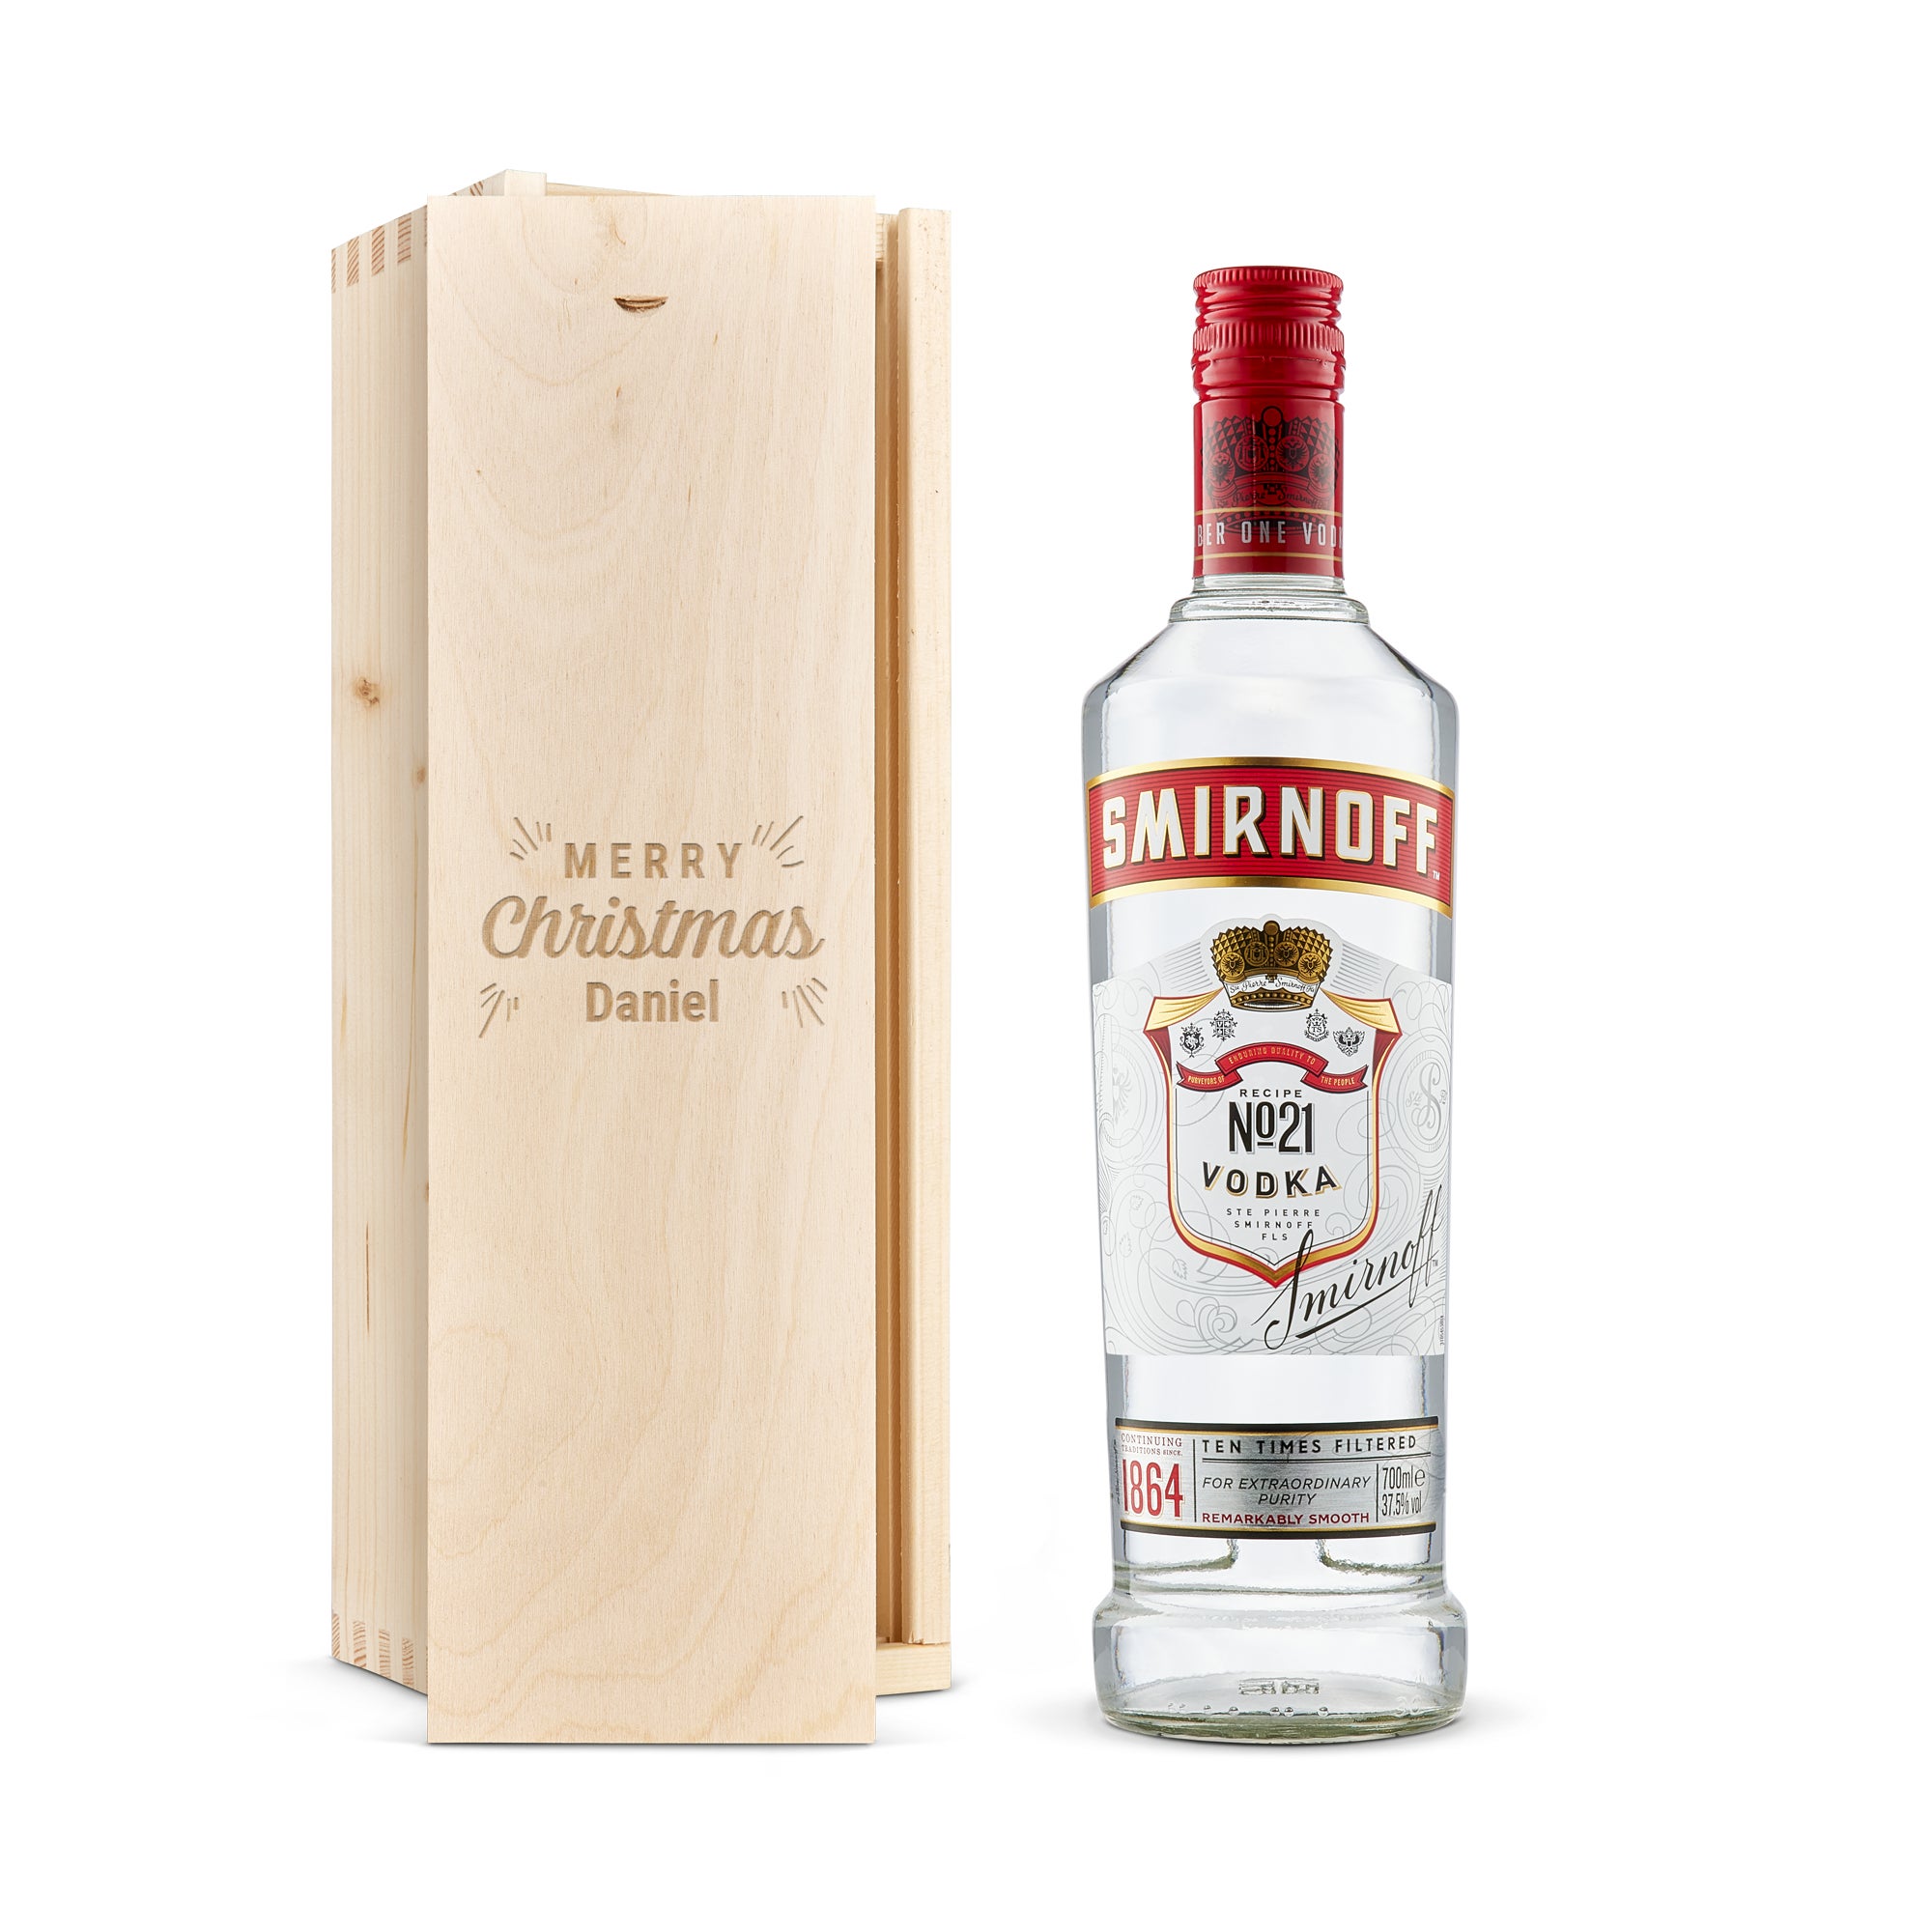 Personalised vodka gift - Smirnoff - Engraved wooden case